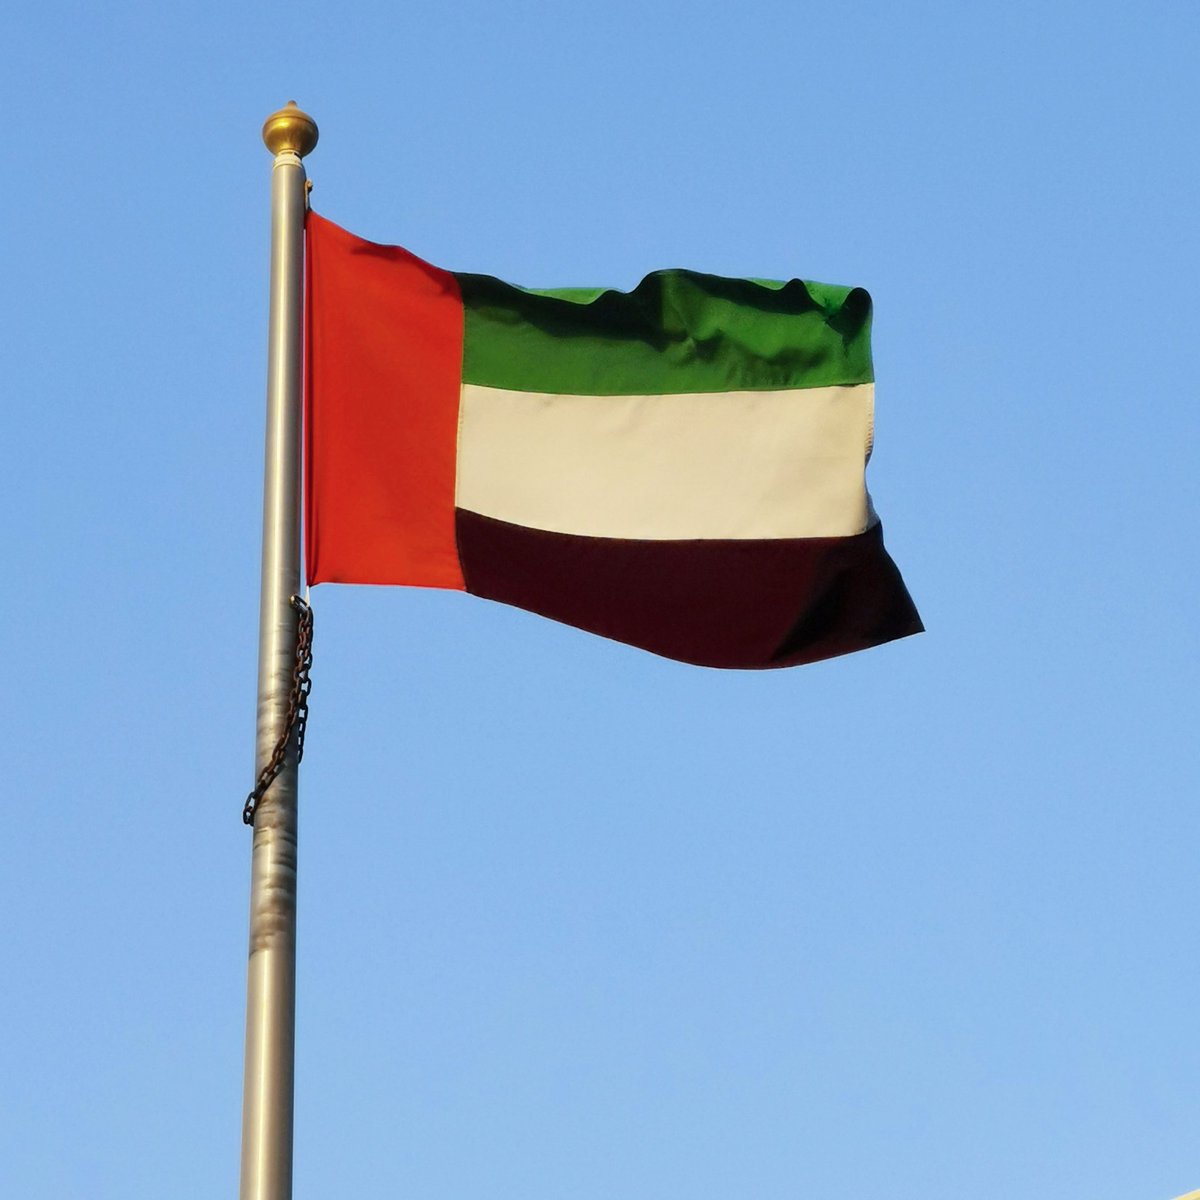 UAE Flag Day 🇦🇪 #UAEFlagDay #FlagDayUAE #RaiseItHigh #FlagDay #Flag_Day #Red #Green #White #Black #AlMuneera #AbuDhabi #Dubai #Sharjah #Ajman #Fujerah #OmAlQuain #RasAlKheema #UAE #November3 #يوم_العلم #الإمارات #نوفمبر3_يوم_العلم #نوفمبر_3